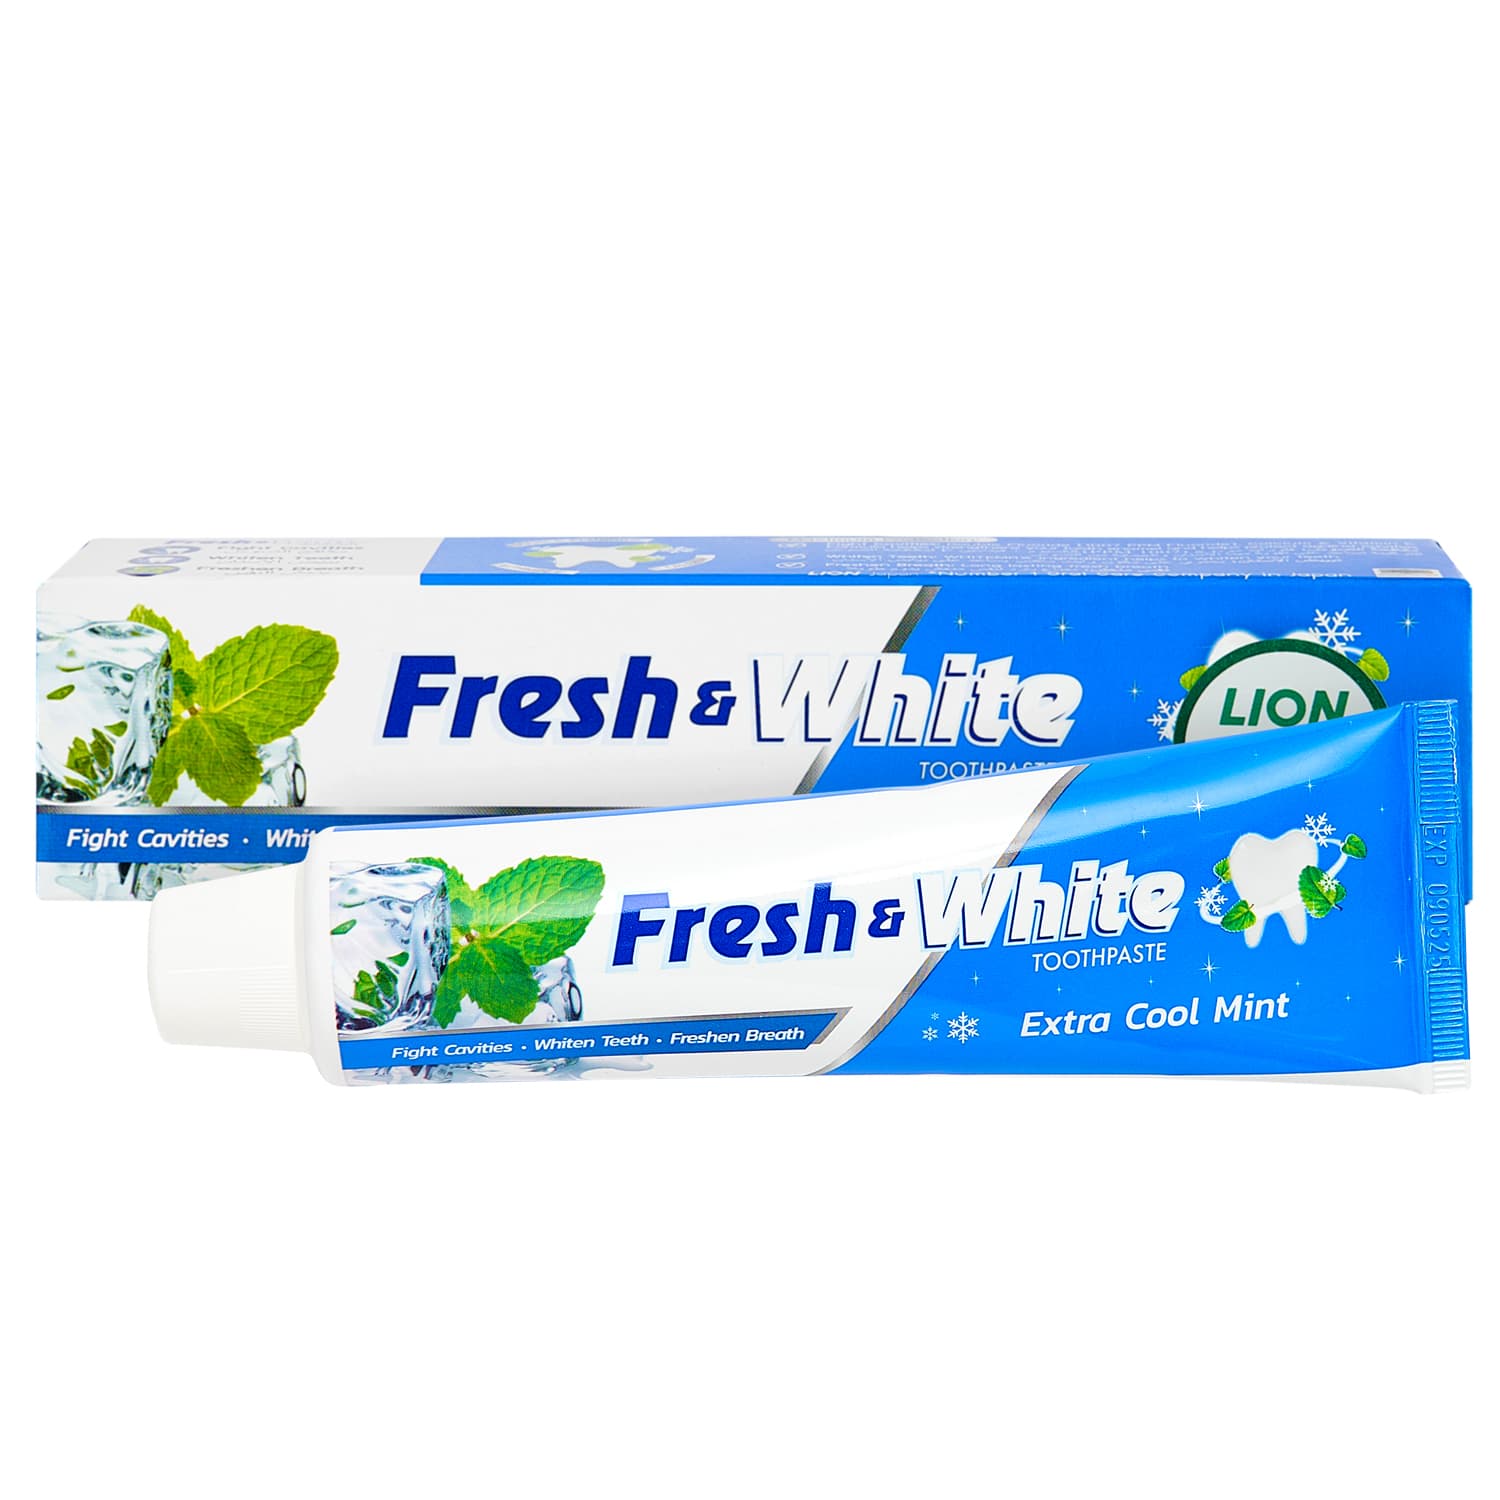 Lion Thailand Отбеливающая зубная паста Суперпрохладная мята, 160 г (Lion Thailand, Fresh & White) уход за полостью рта global white отбеливающая зубная паста whitening max shine